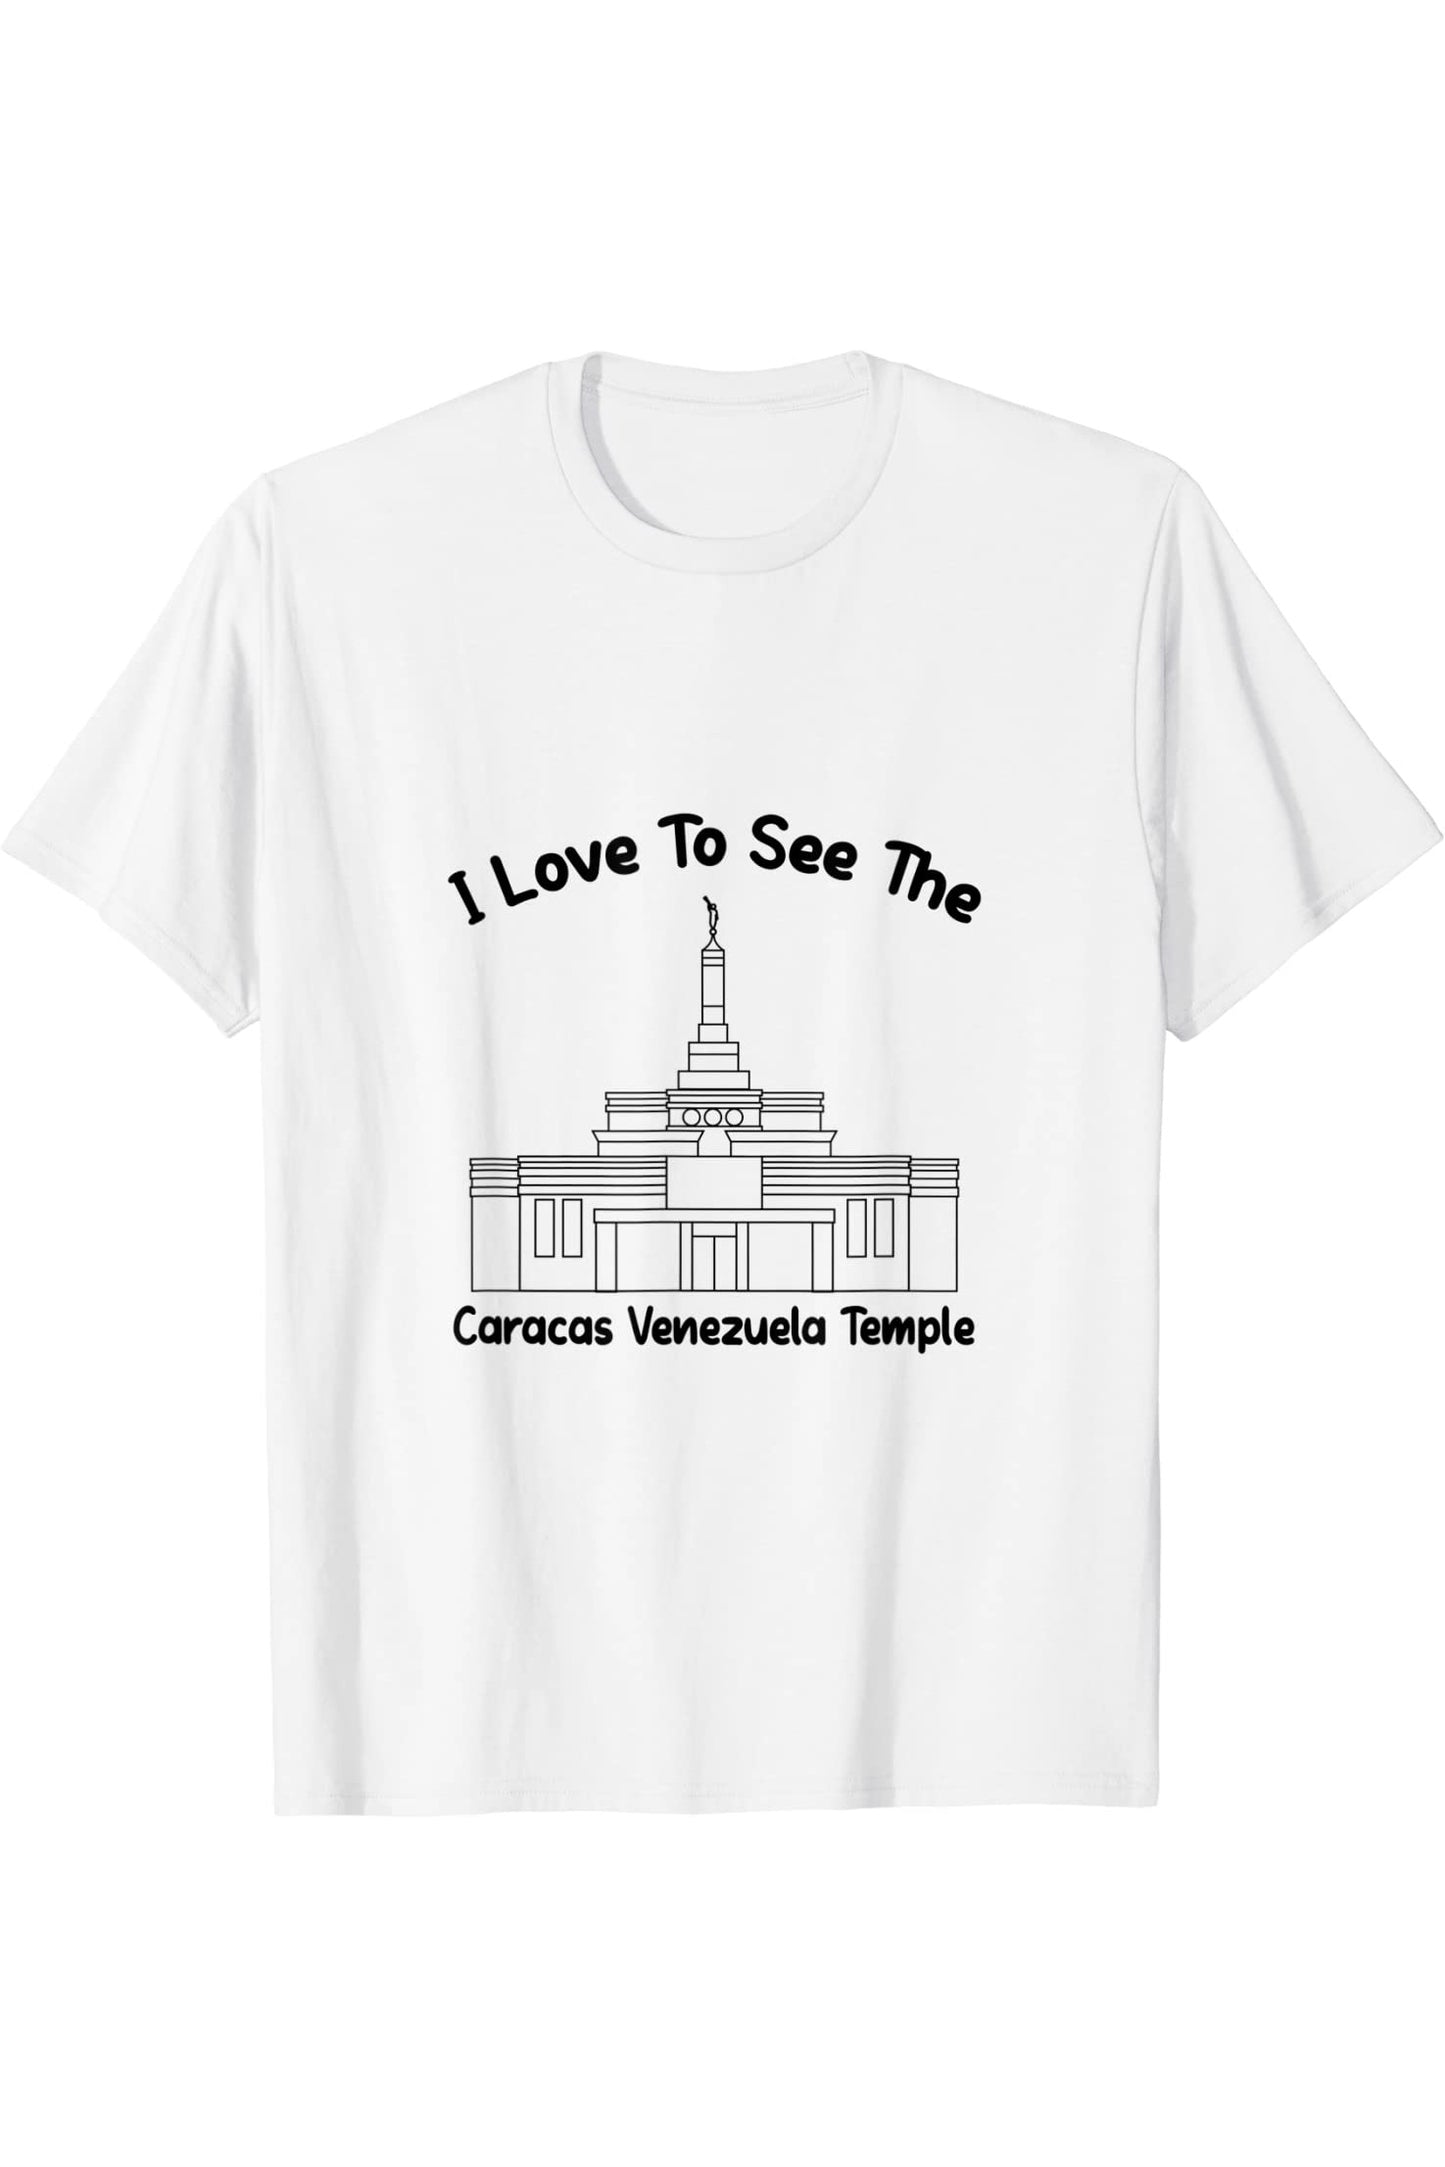 Caracas Venezuela Temple T-Shirt - Primary Style (English) US